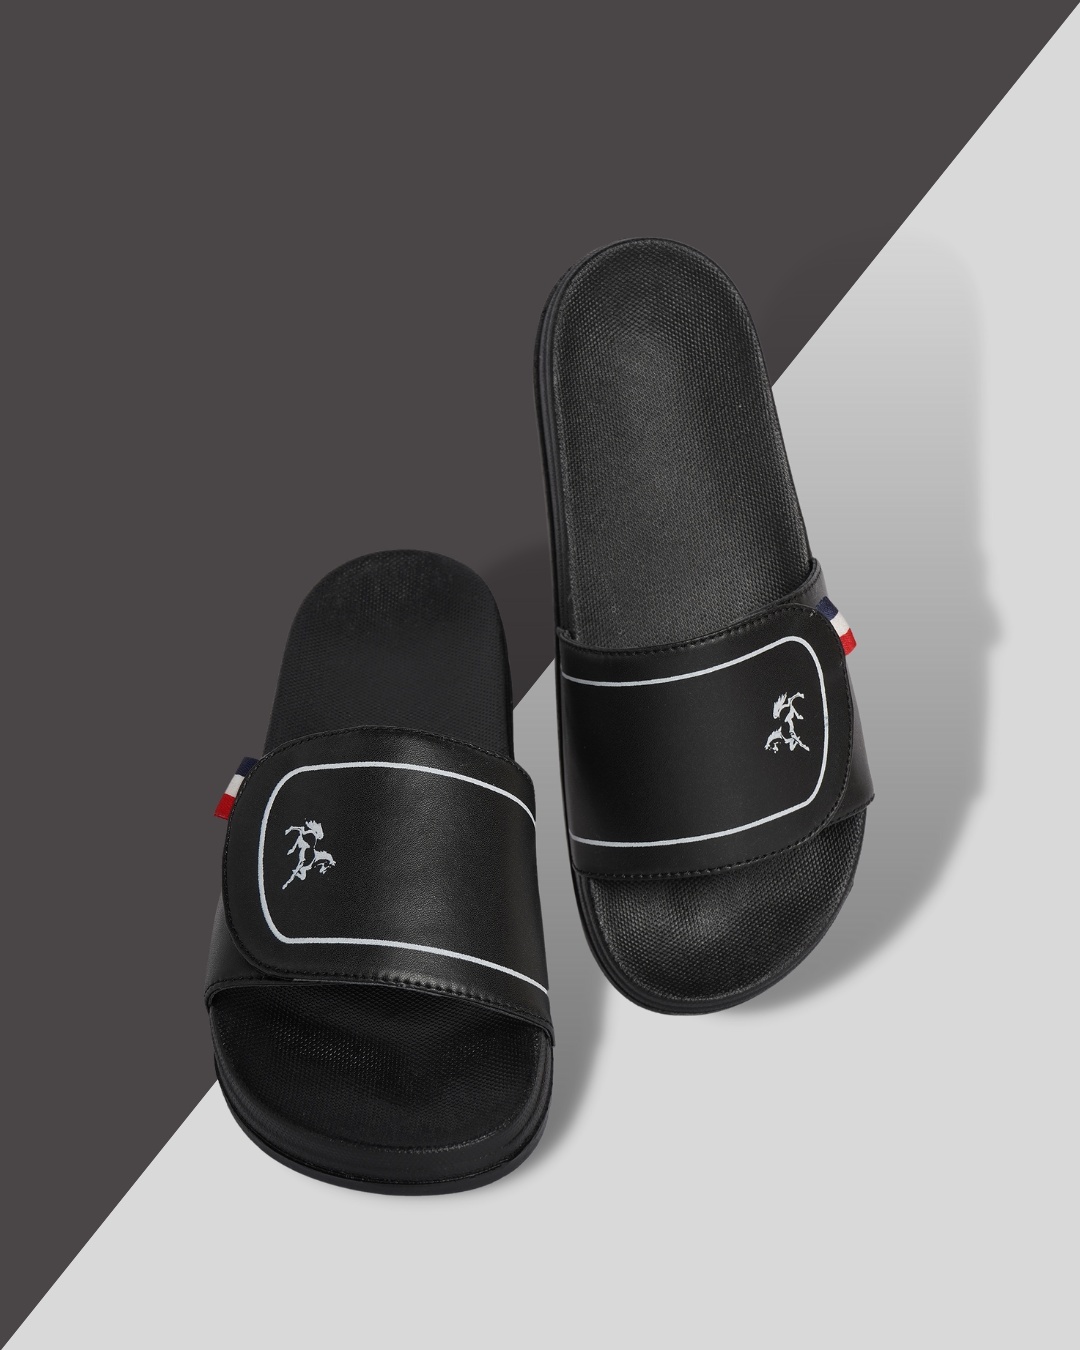 Buy Men's Black Printed Velcro Sliders Online in India at Bewakoof